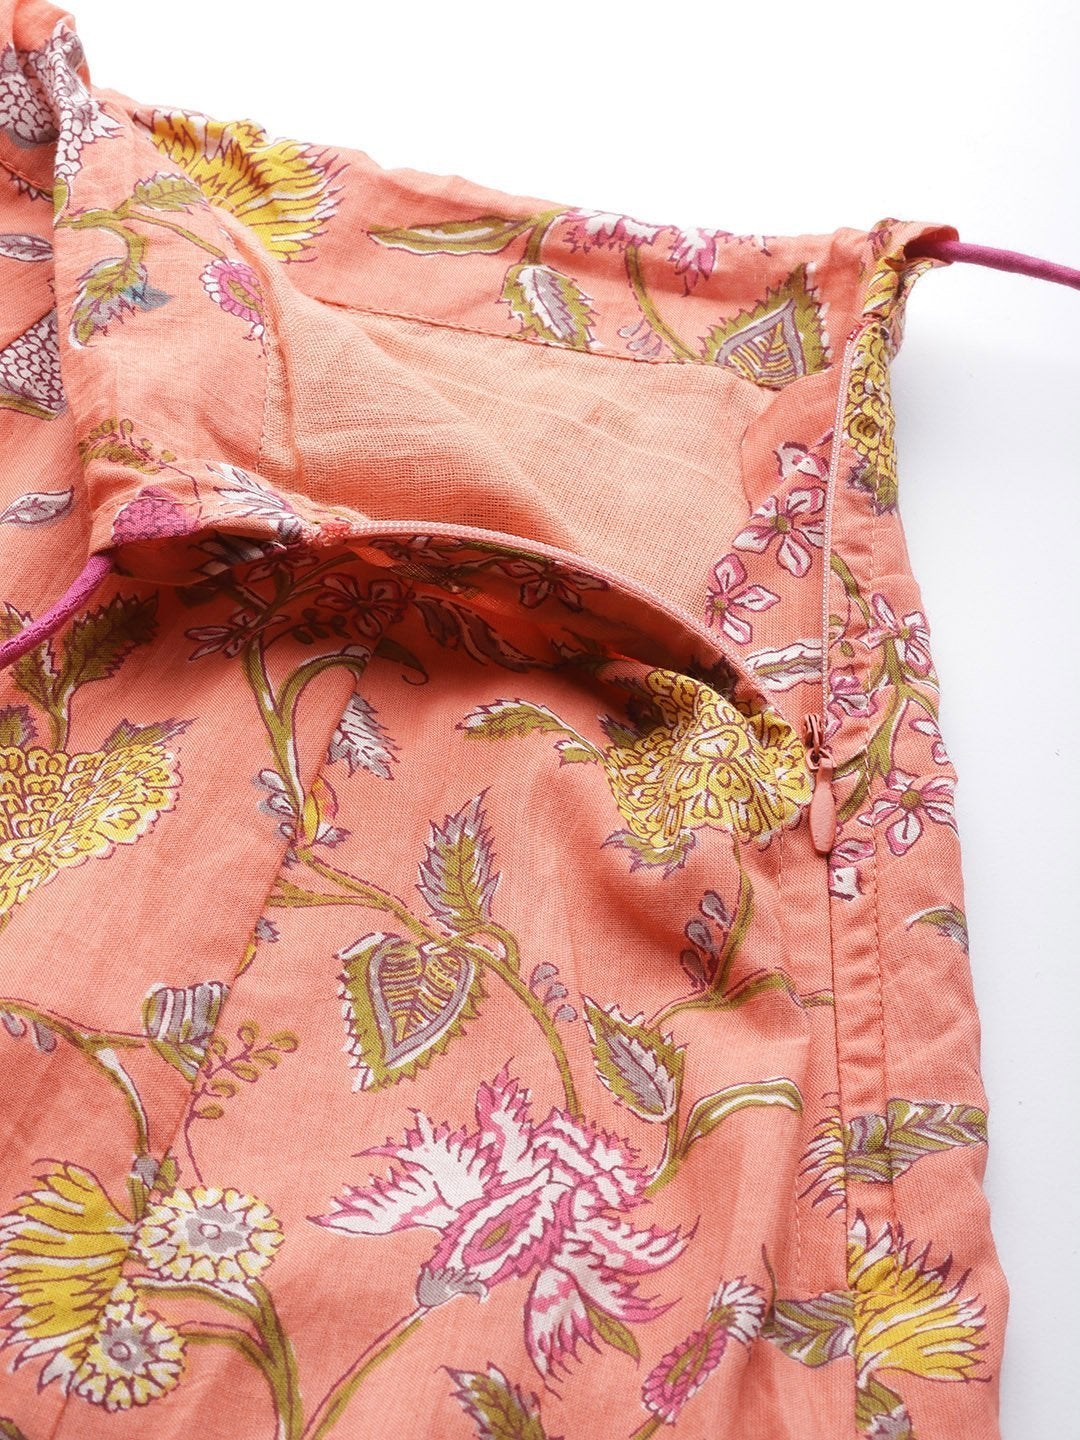 Women's Peach Floral Anarkali Skirt - SHAE